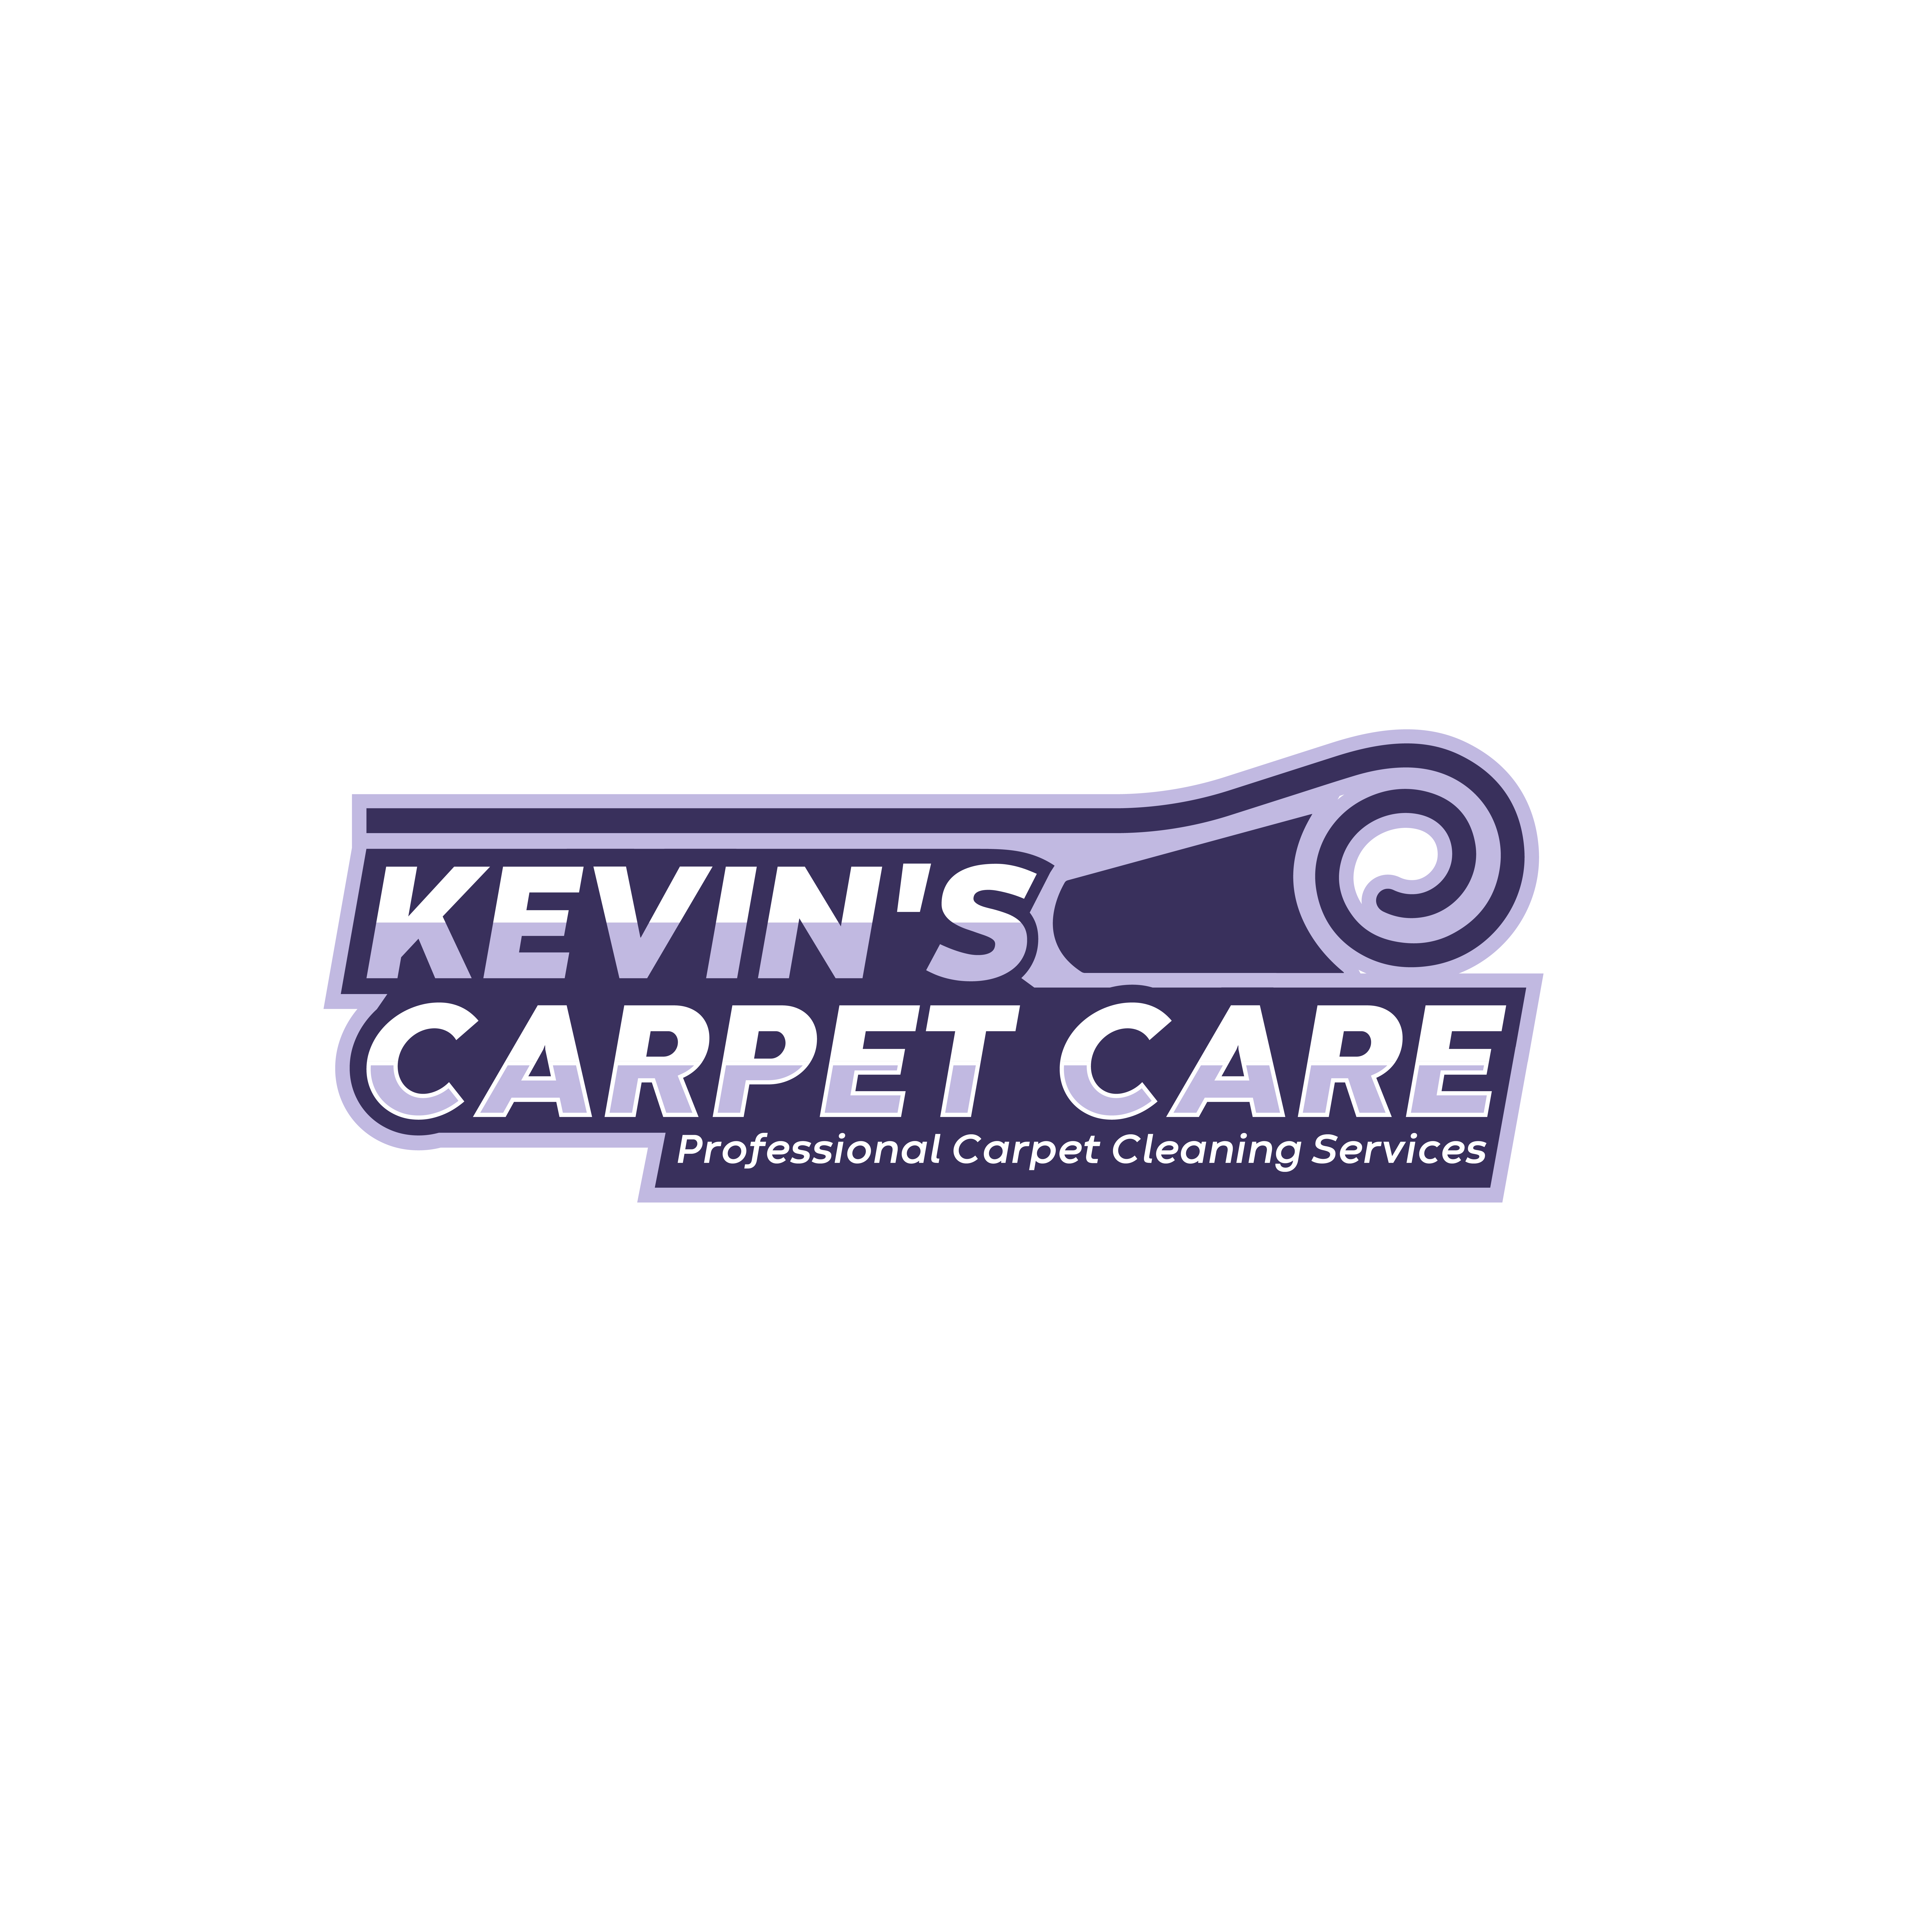 Kevin's Carpet Care, icon.